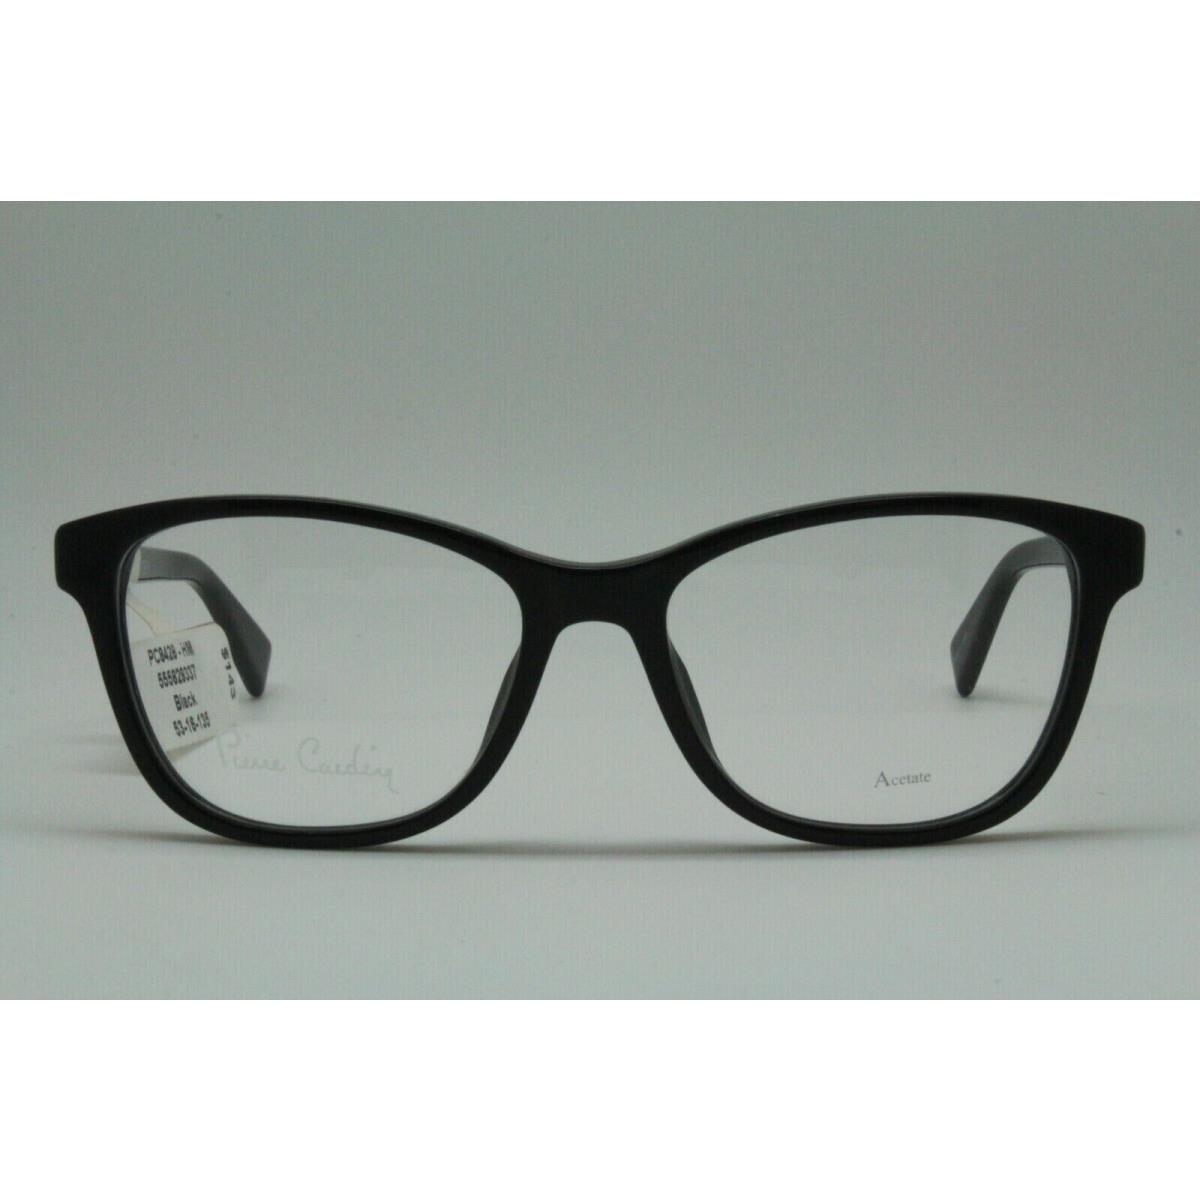 1 Unit Pierre Cardin Black Eyeglass Frames 53-16-135 079